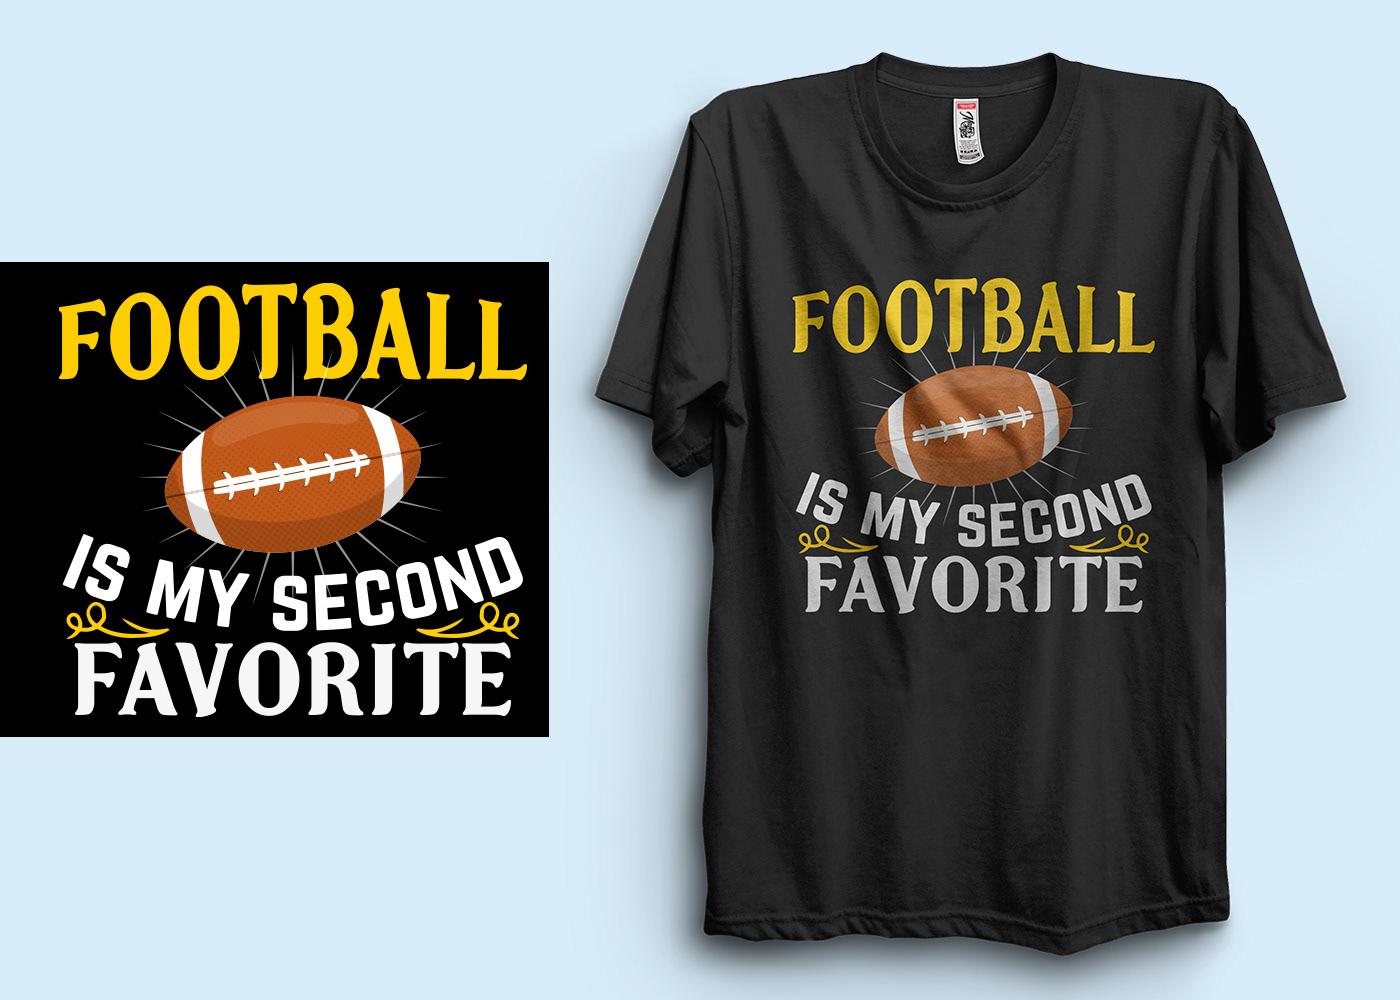 t-shirt T-Shirt Design tshirt Tshirt Design football football t-shirt design american football gaming t-shirt design sports t-shirt Typography T-shirt